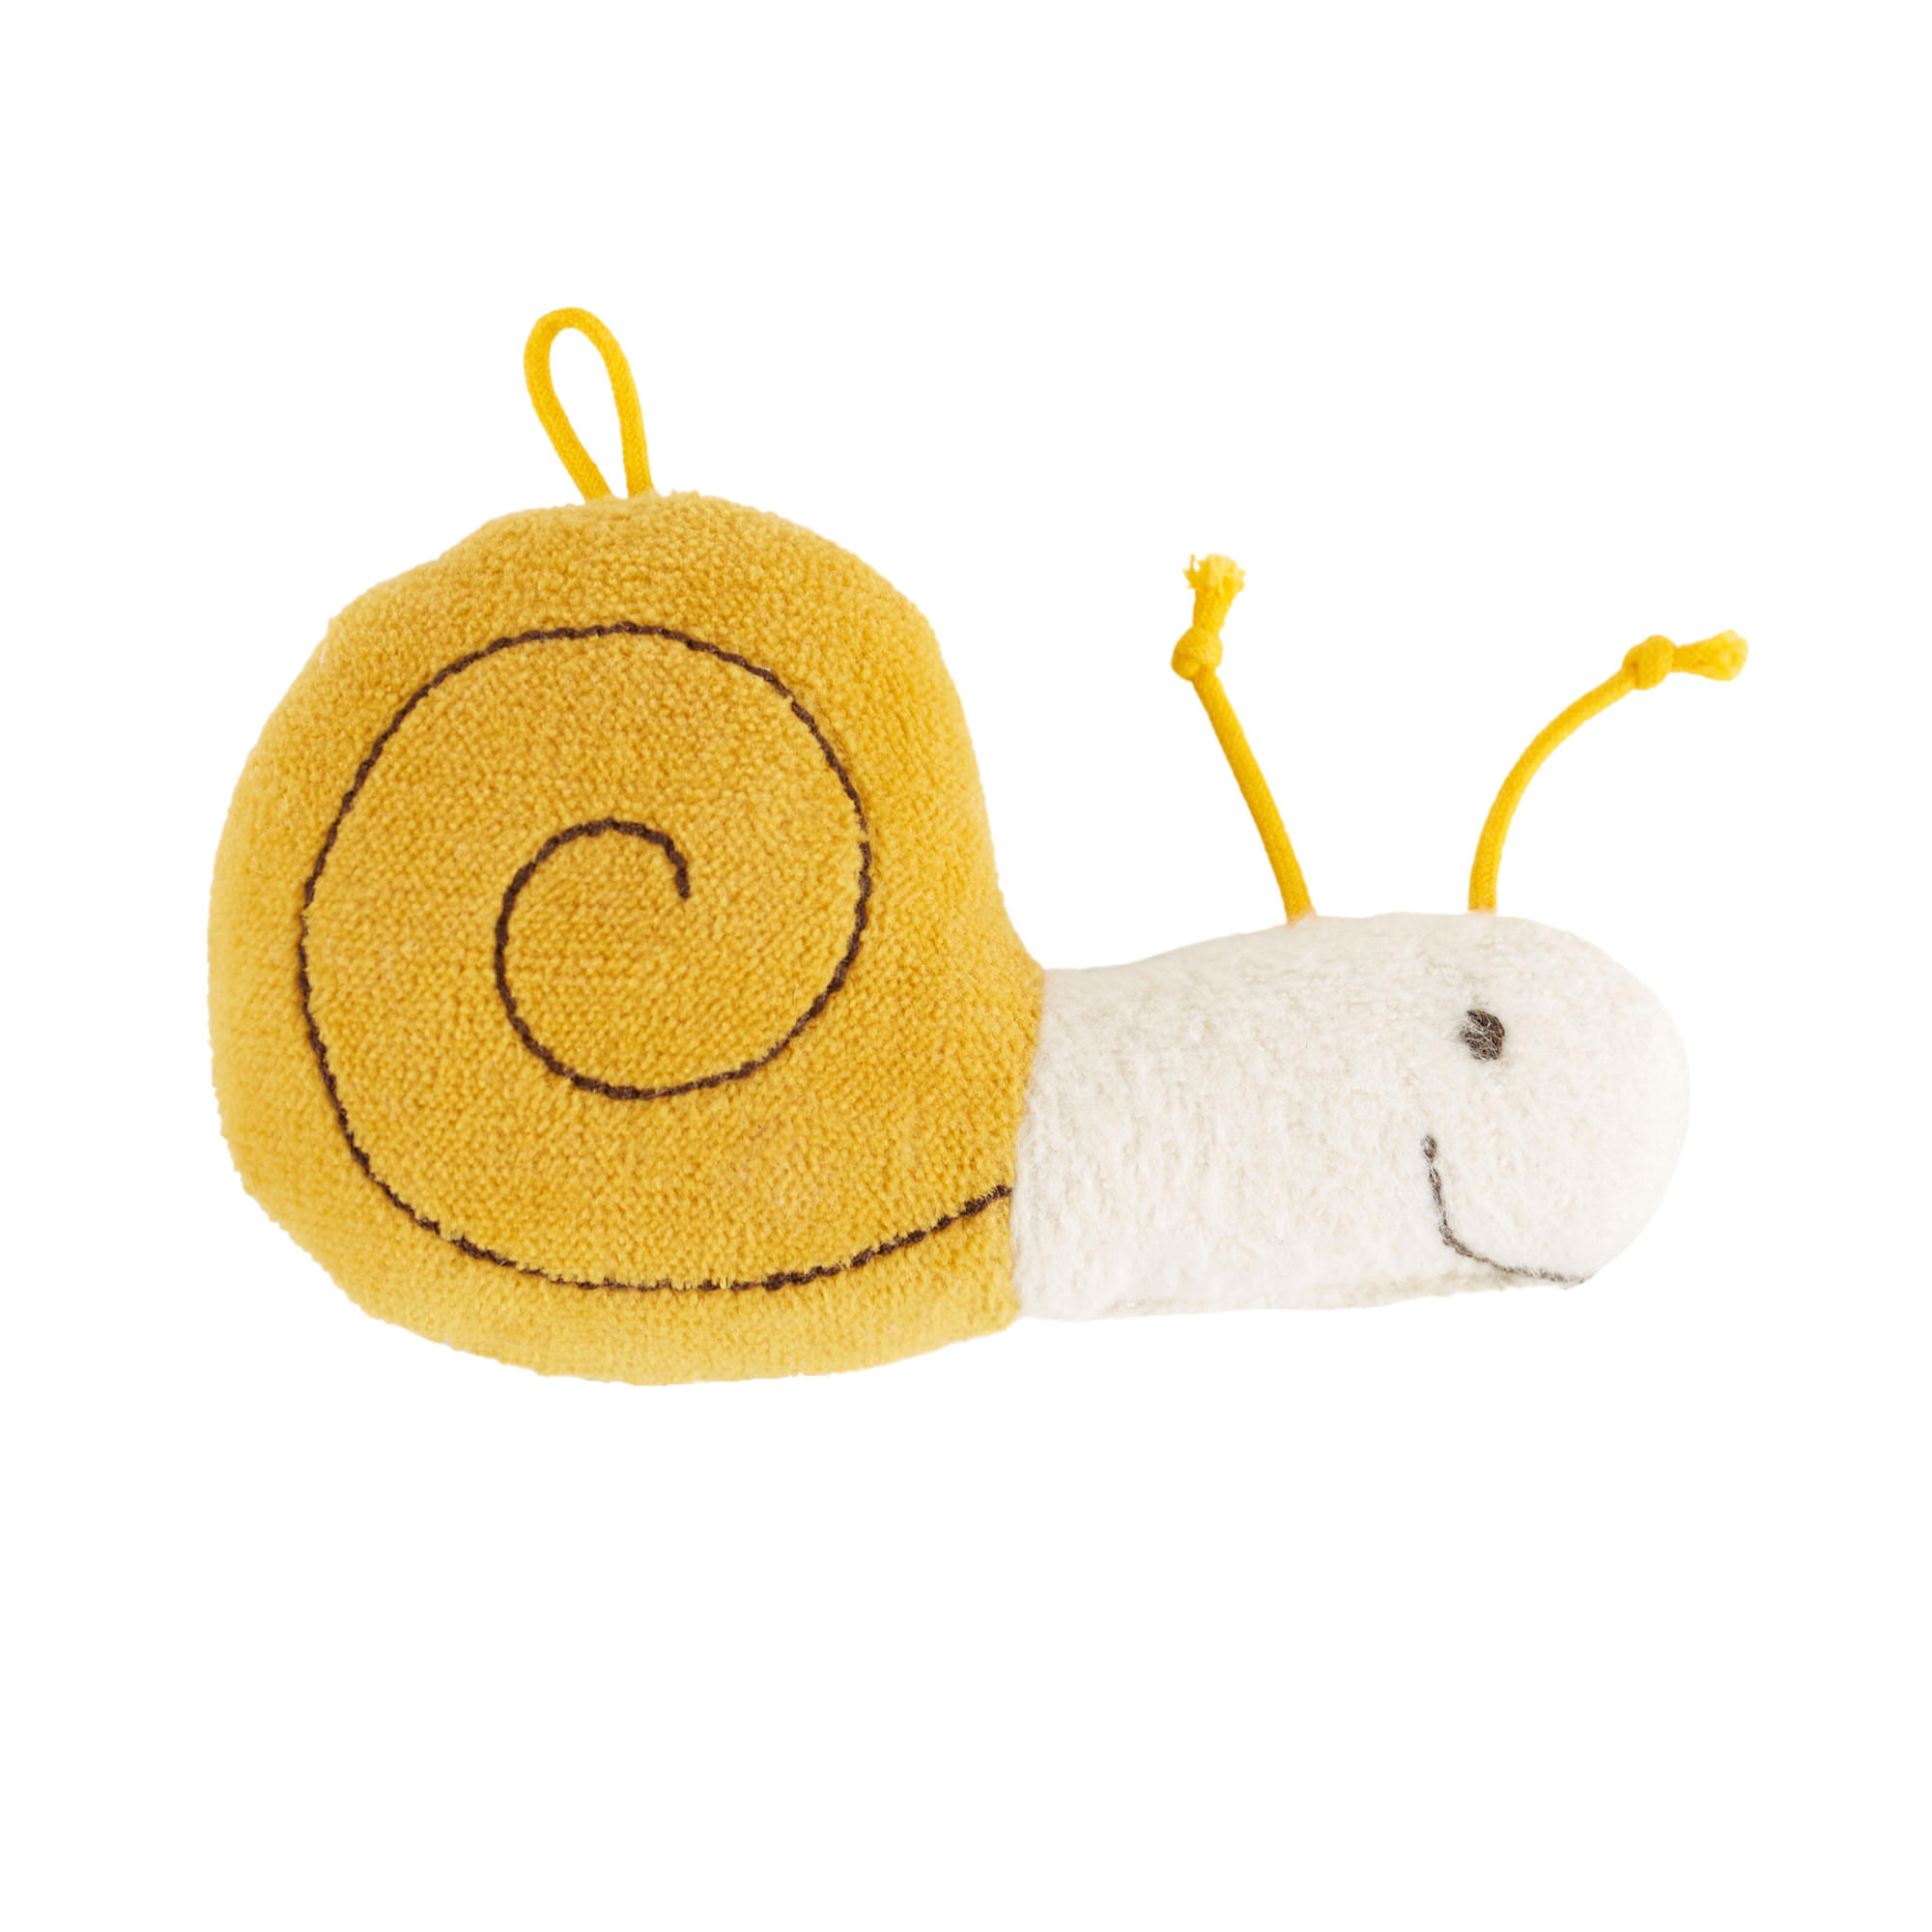 Soft baby grasp toy rattle snail, organic